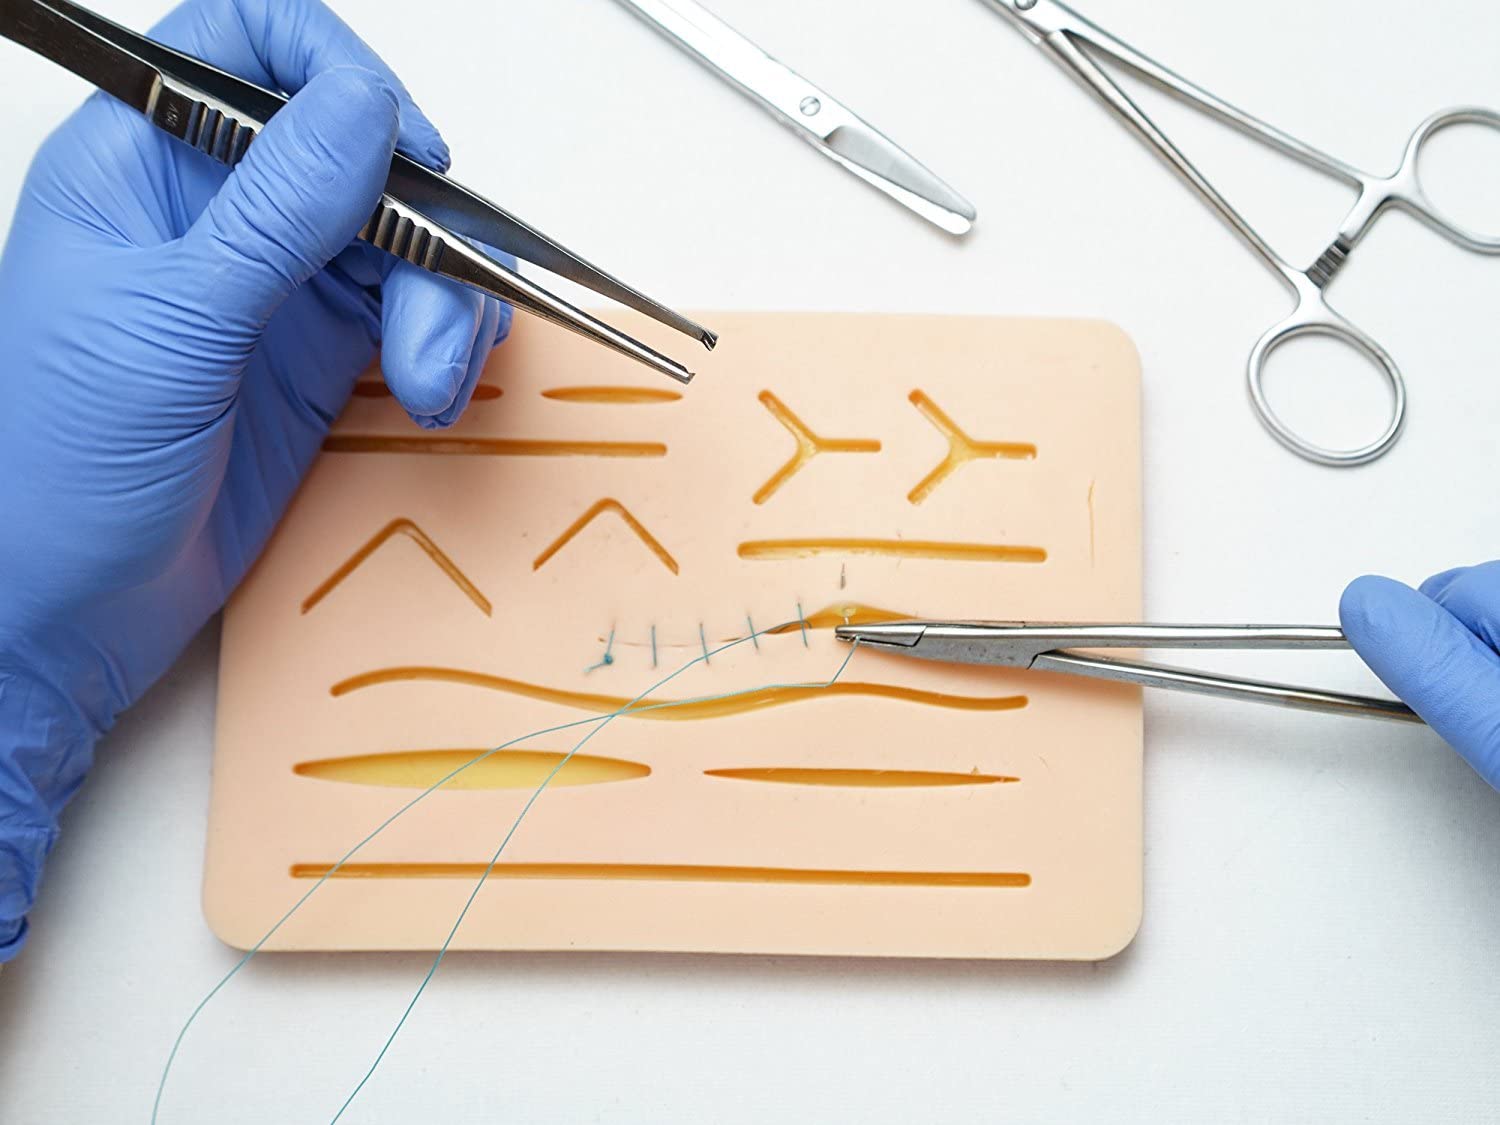 surgical suture training kit